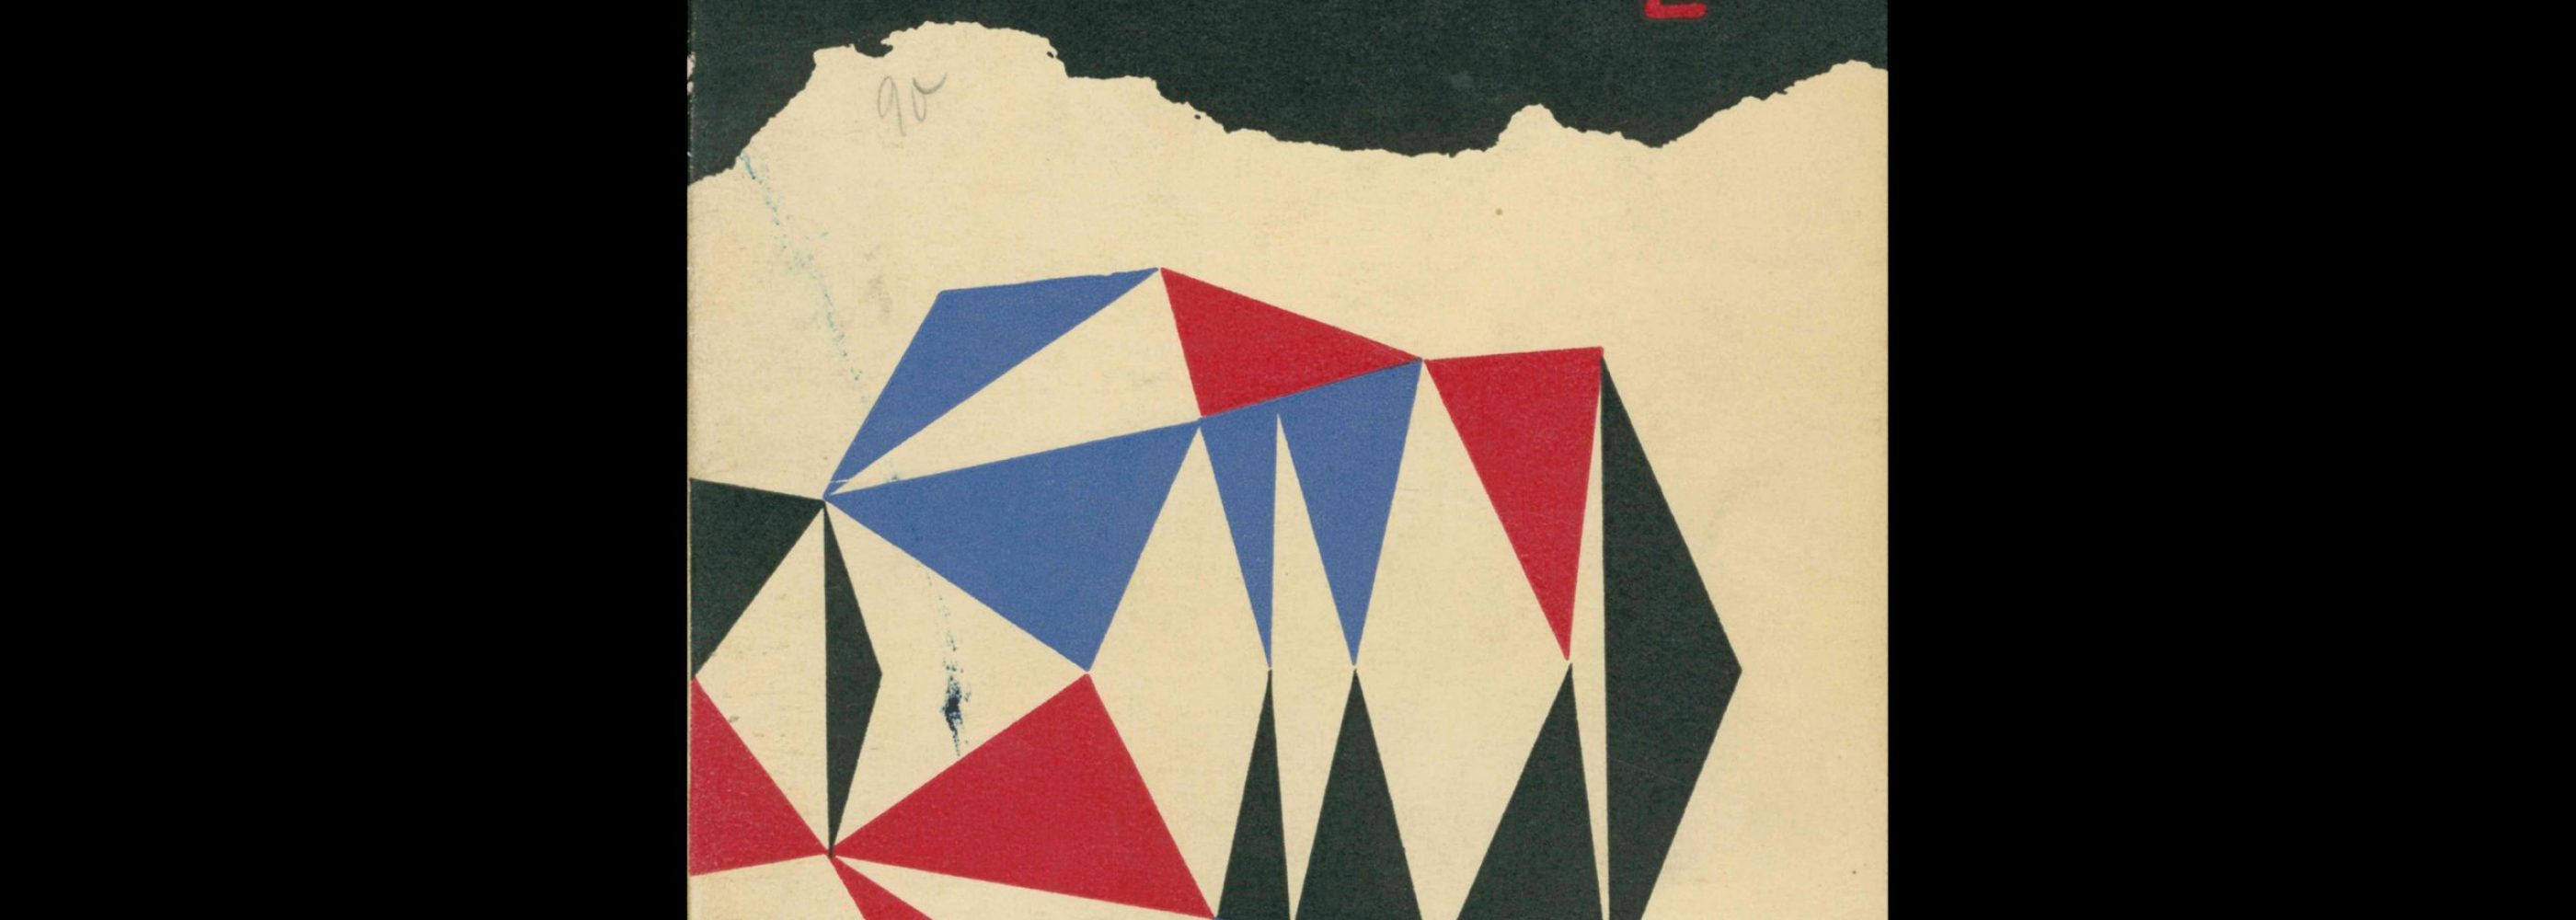 Perspektiven, Literatur, Kunst, Musik, 2, 1953. Cover design by Leo Lionni